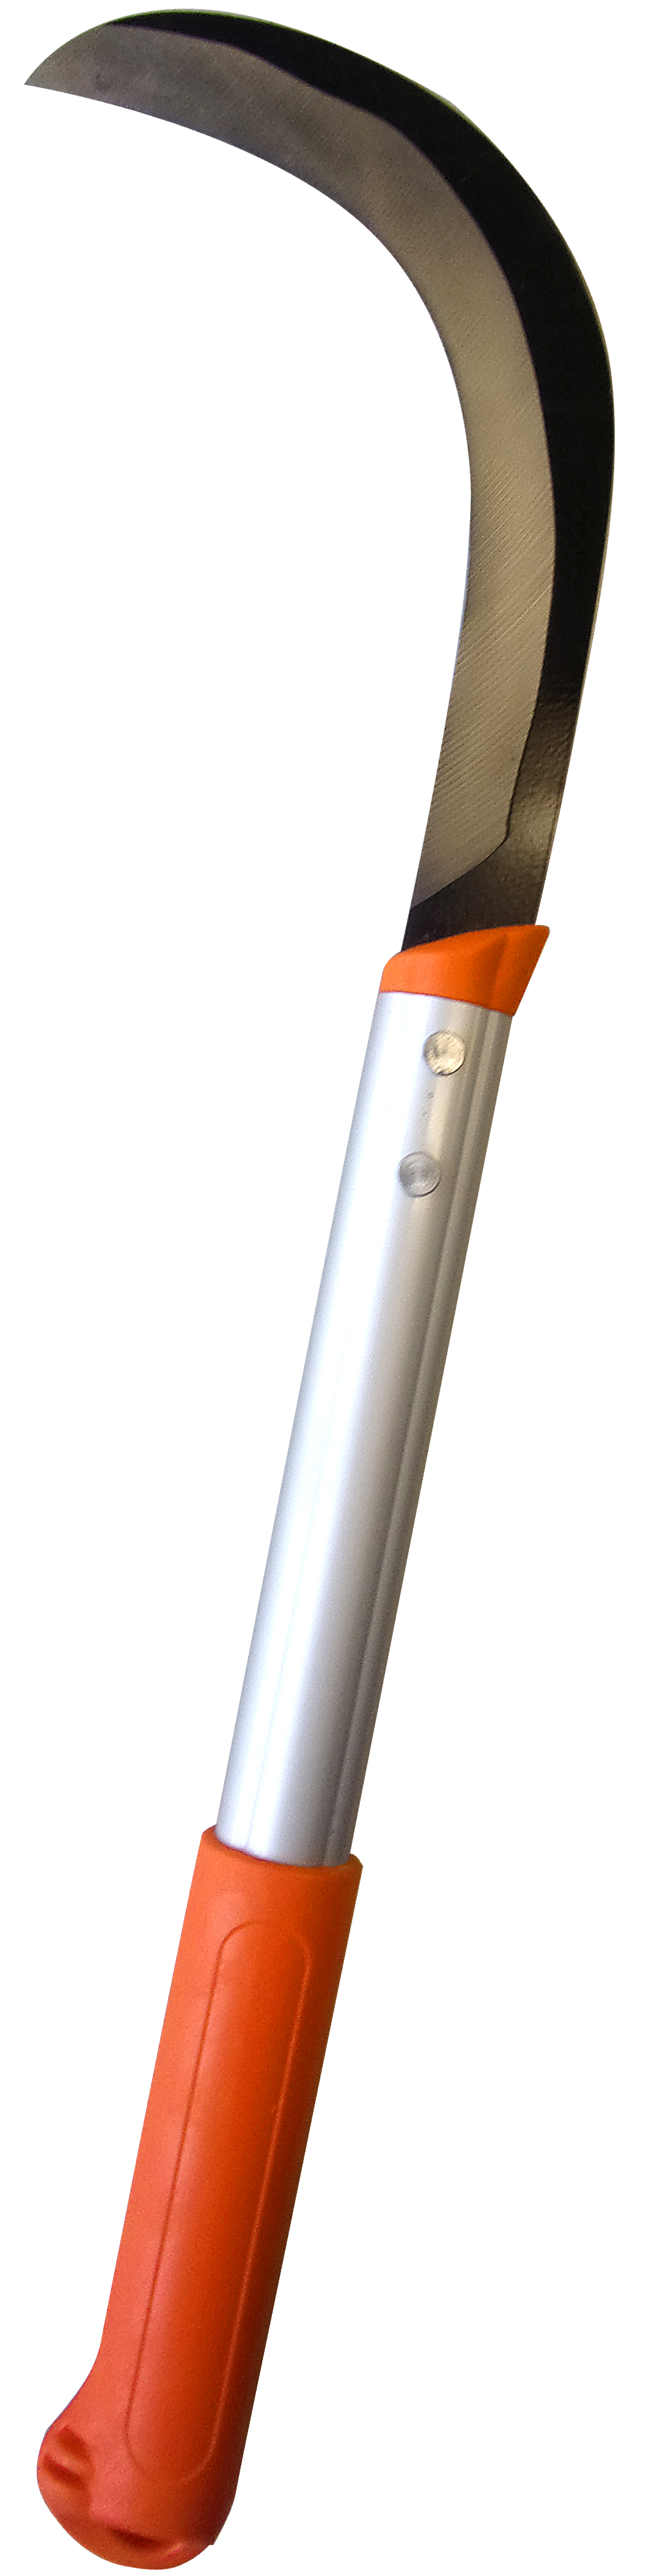 Zenport Sickle K315 Brush Clearing Sickle, 9-Inch SK5 Carbon Steel Blade, 14-Inch Aluminum Handle